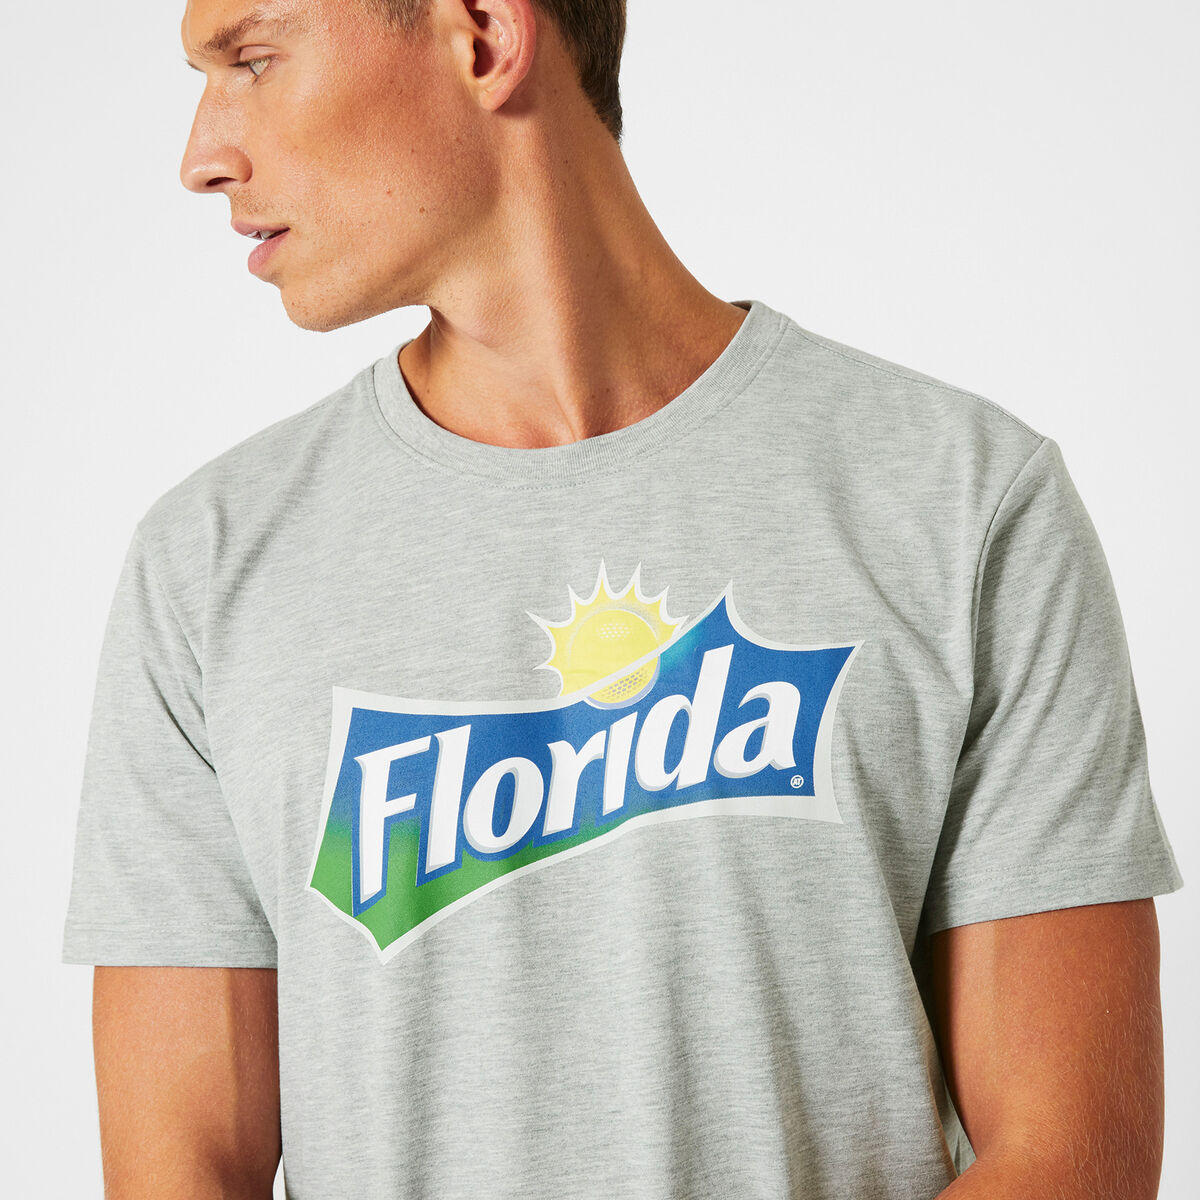 T-shirt Ed florida